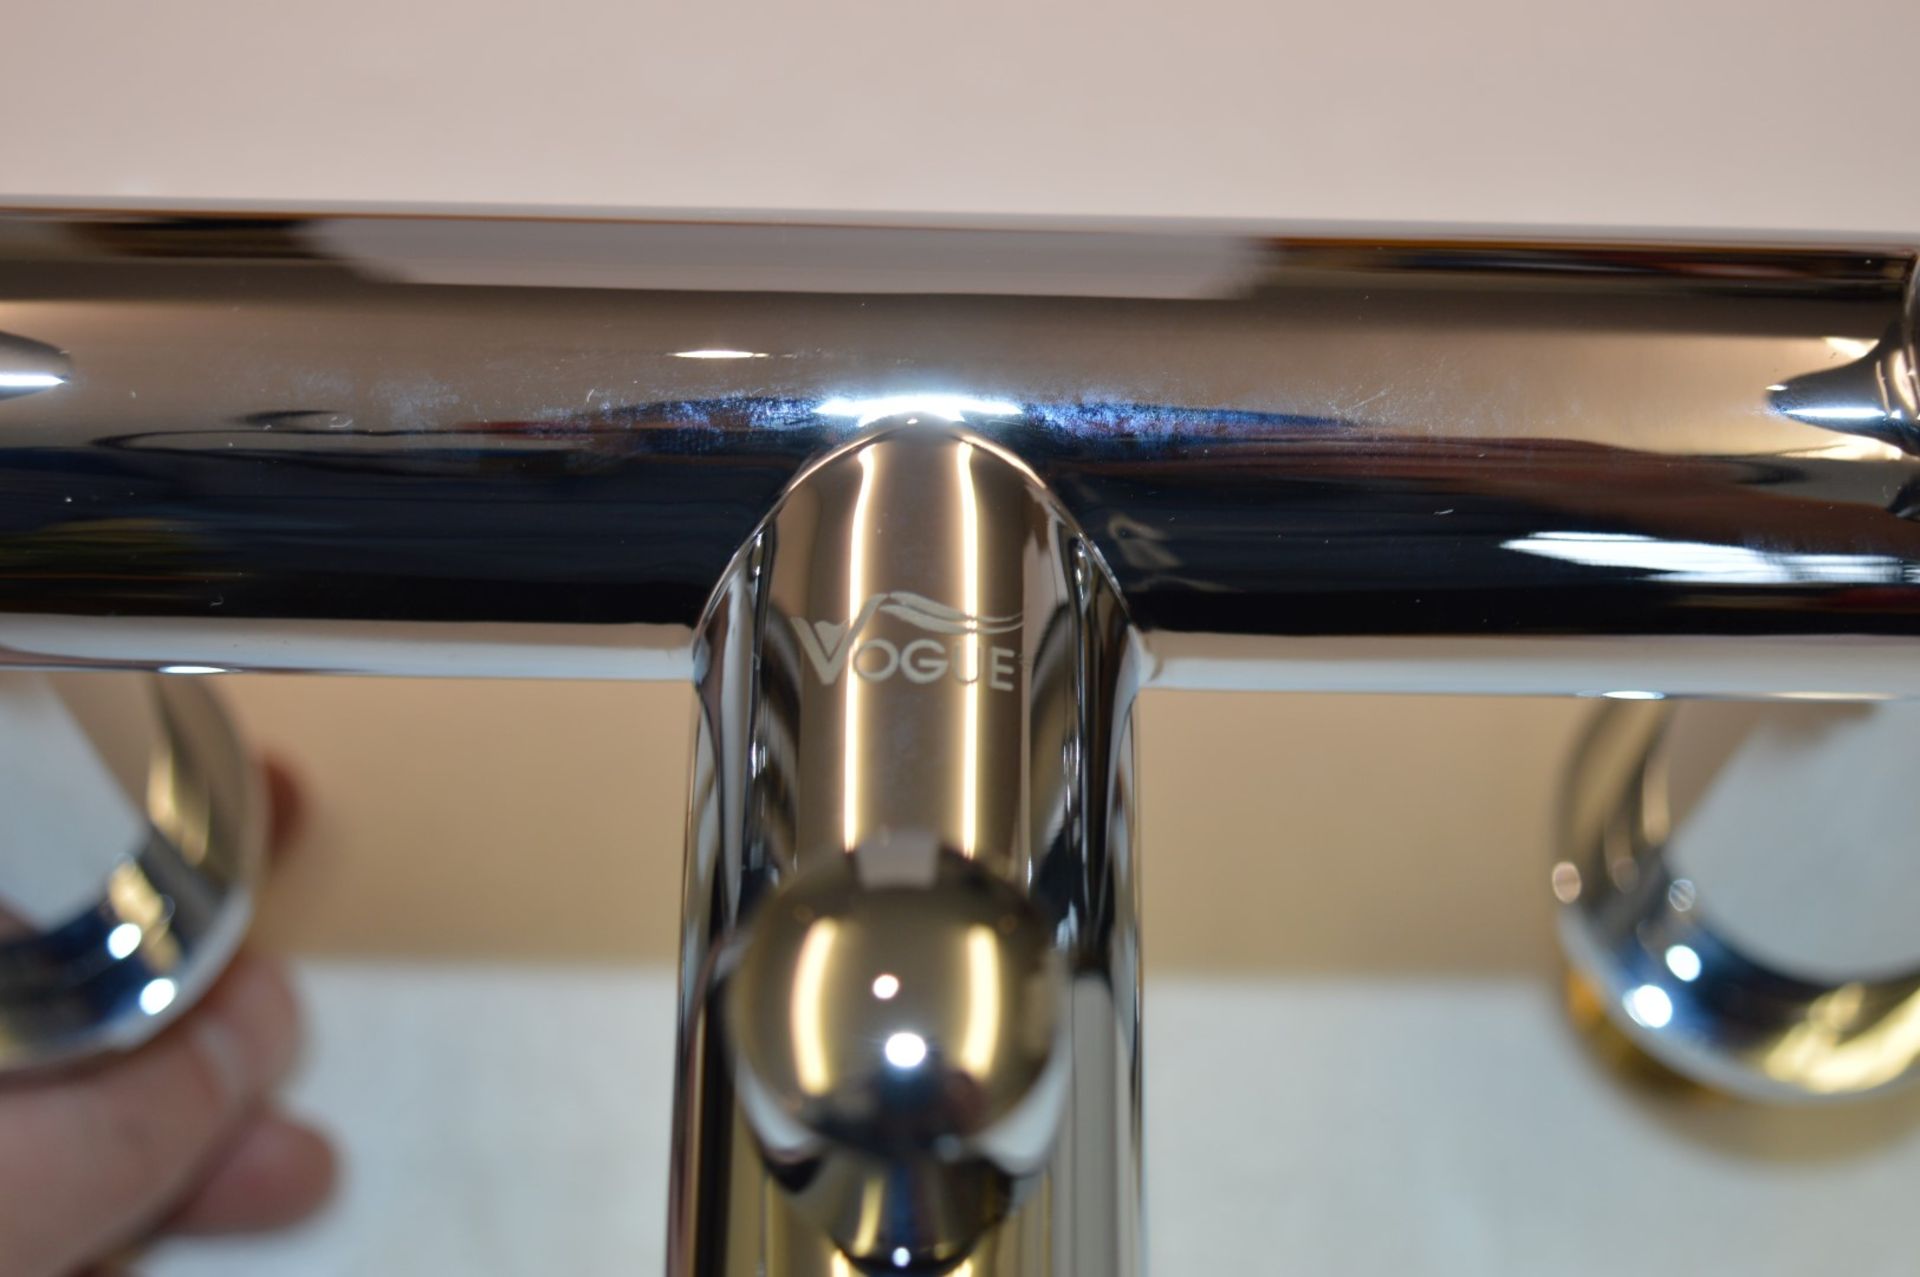 1 x Series 5 Bath Shower Mixer Tap With Handset - Vogue Bathrooms Platinum Brassware Collection - - Image 6 of 9